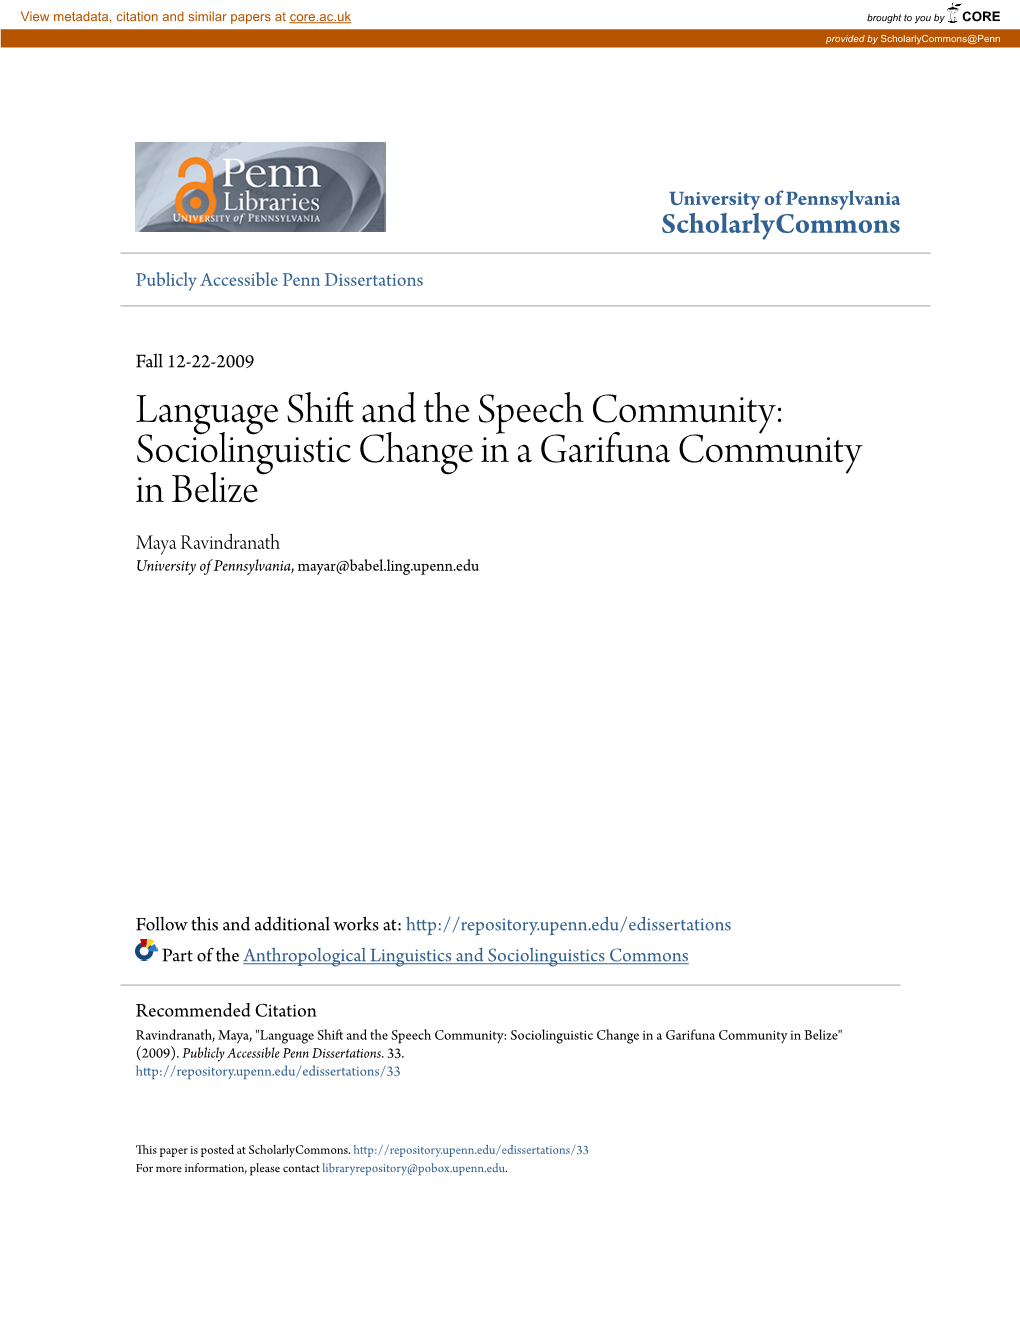 Sociolinguistic Change in a Garifuna Community in Belize Maya Ravindranath University of Pennsylvania, Mayar@Babel.Ling.Upenn.Edu